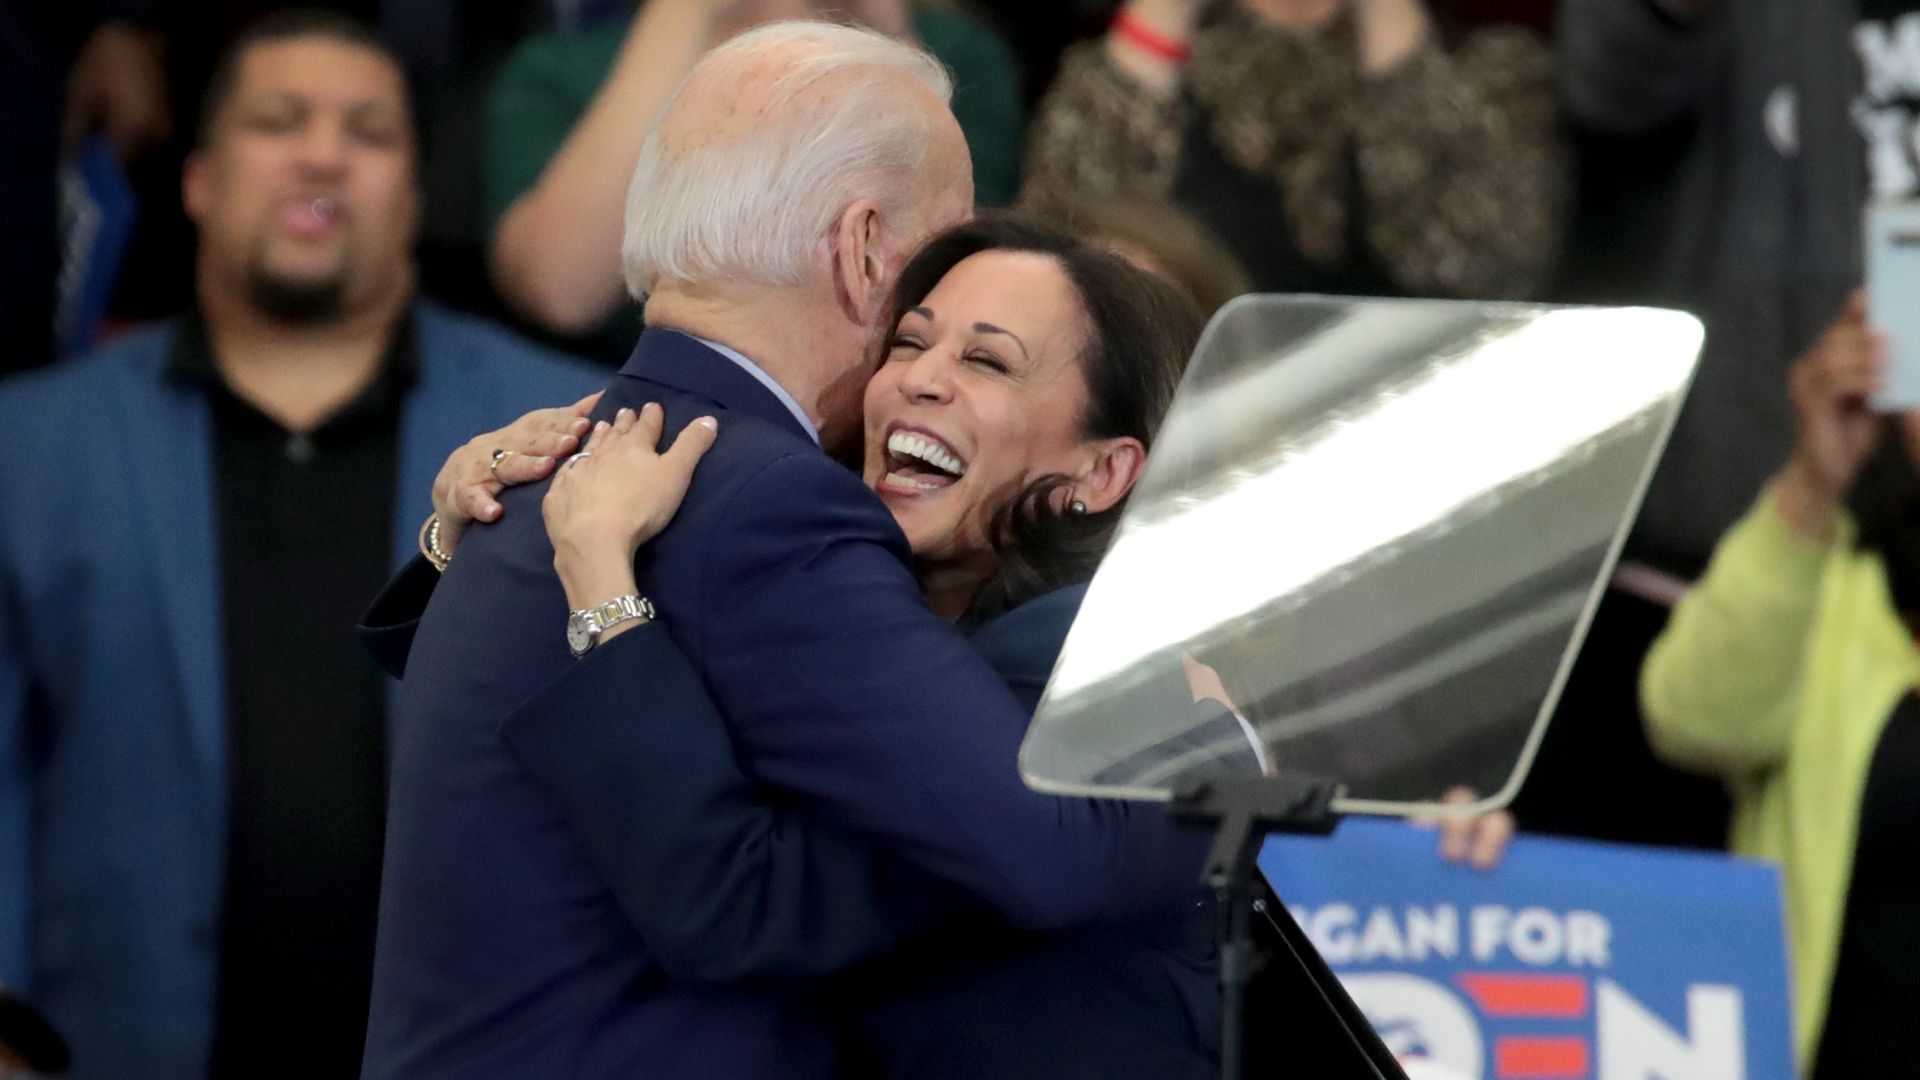 Sen. Kamala Harris hugs Democratic presidential candidate Joe Biden after introducing him at a campaign rally at Renaissance High School on March 09, 2020 in Detroit, Michigan. 